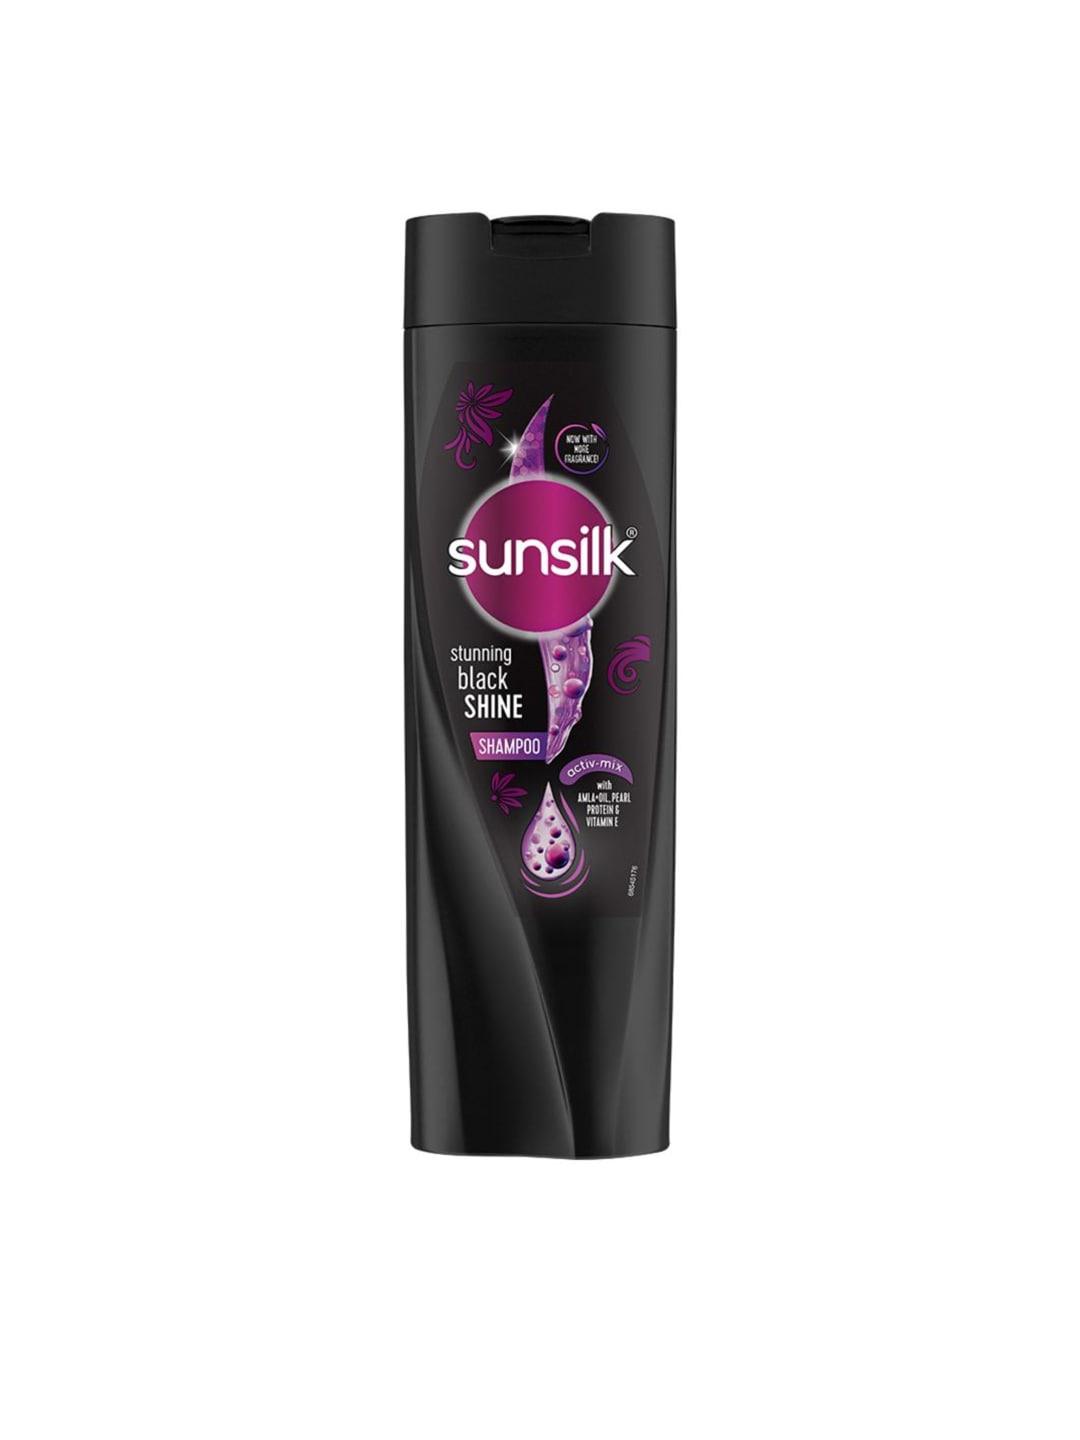 Sunsilk Unisex Stunning Black Shine Shampoo 360 ml